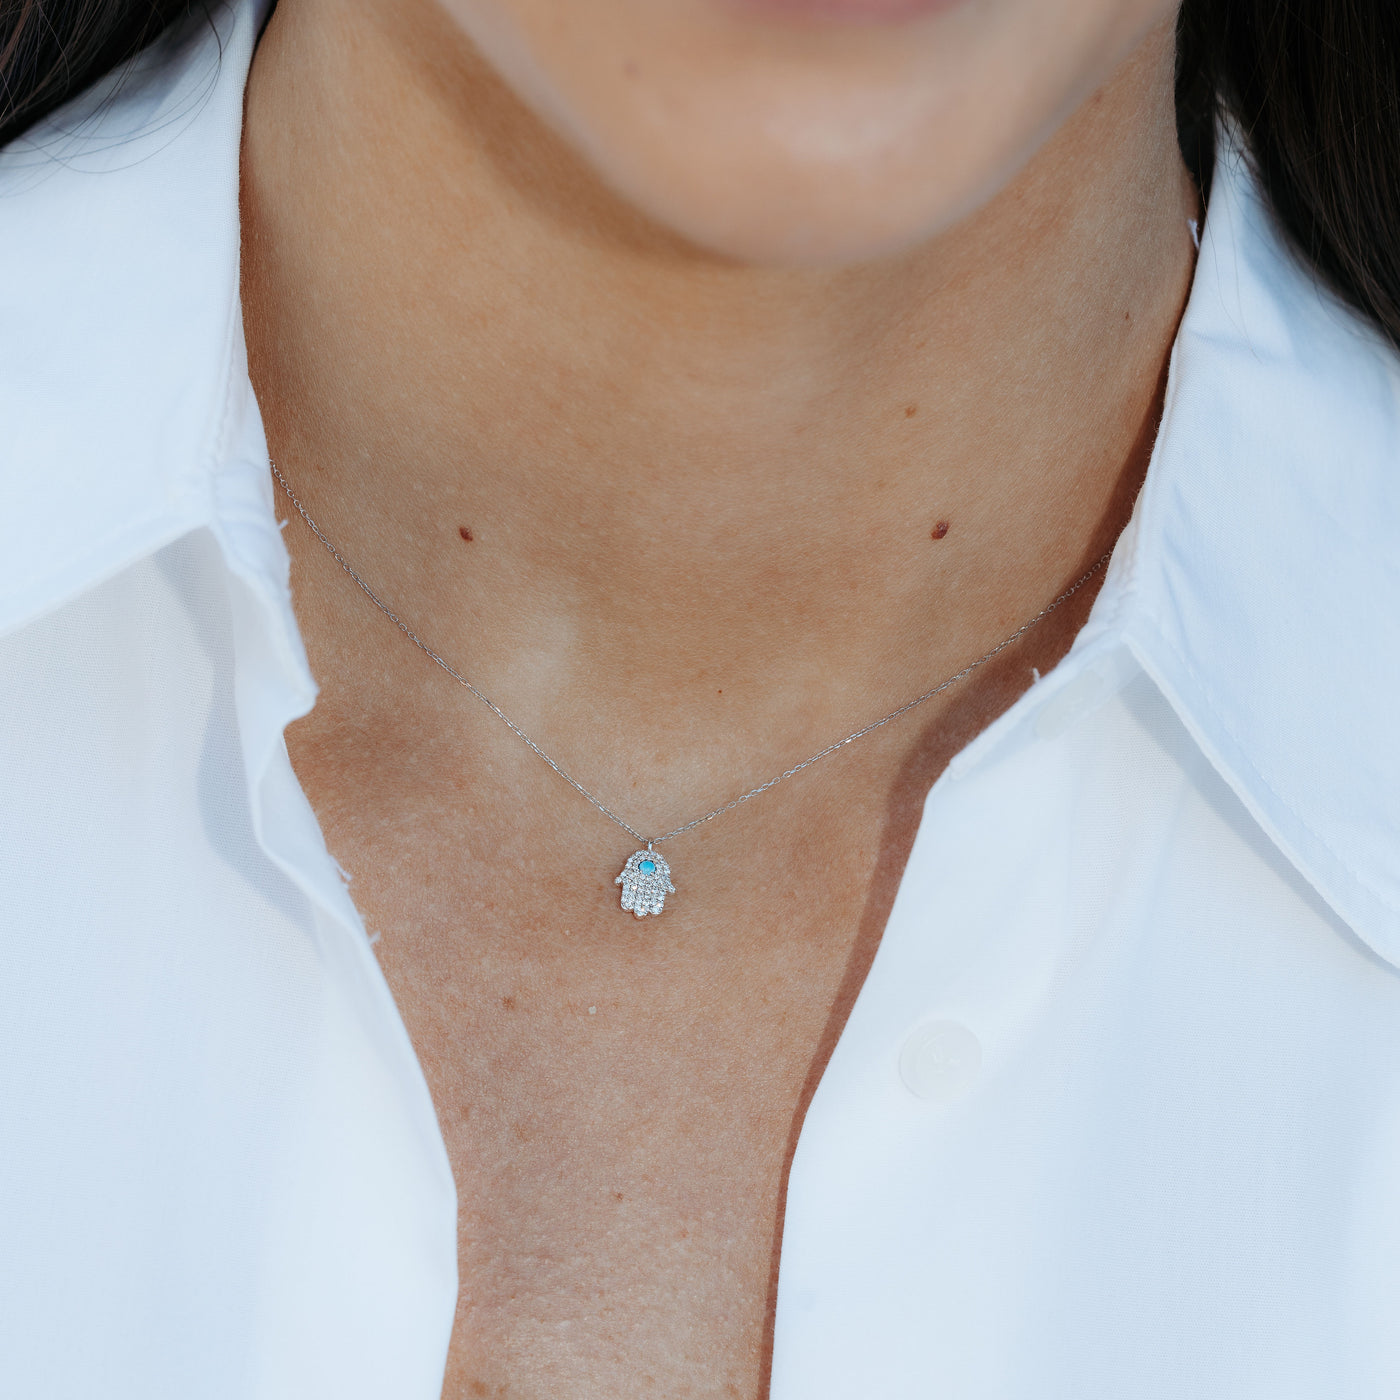 diamond and turquoise hamsa necklace